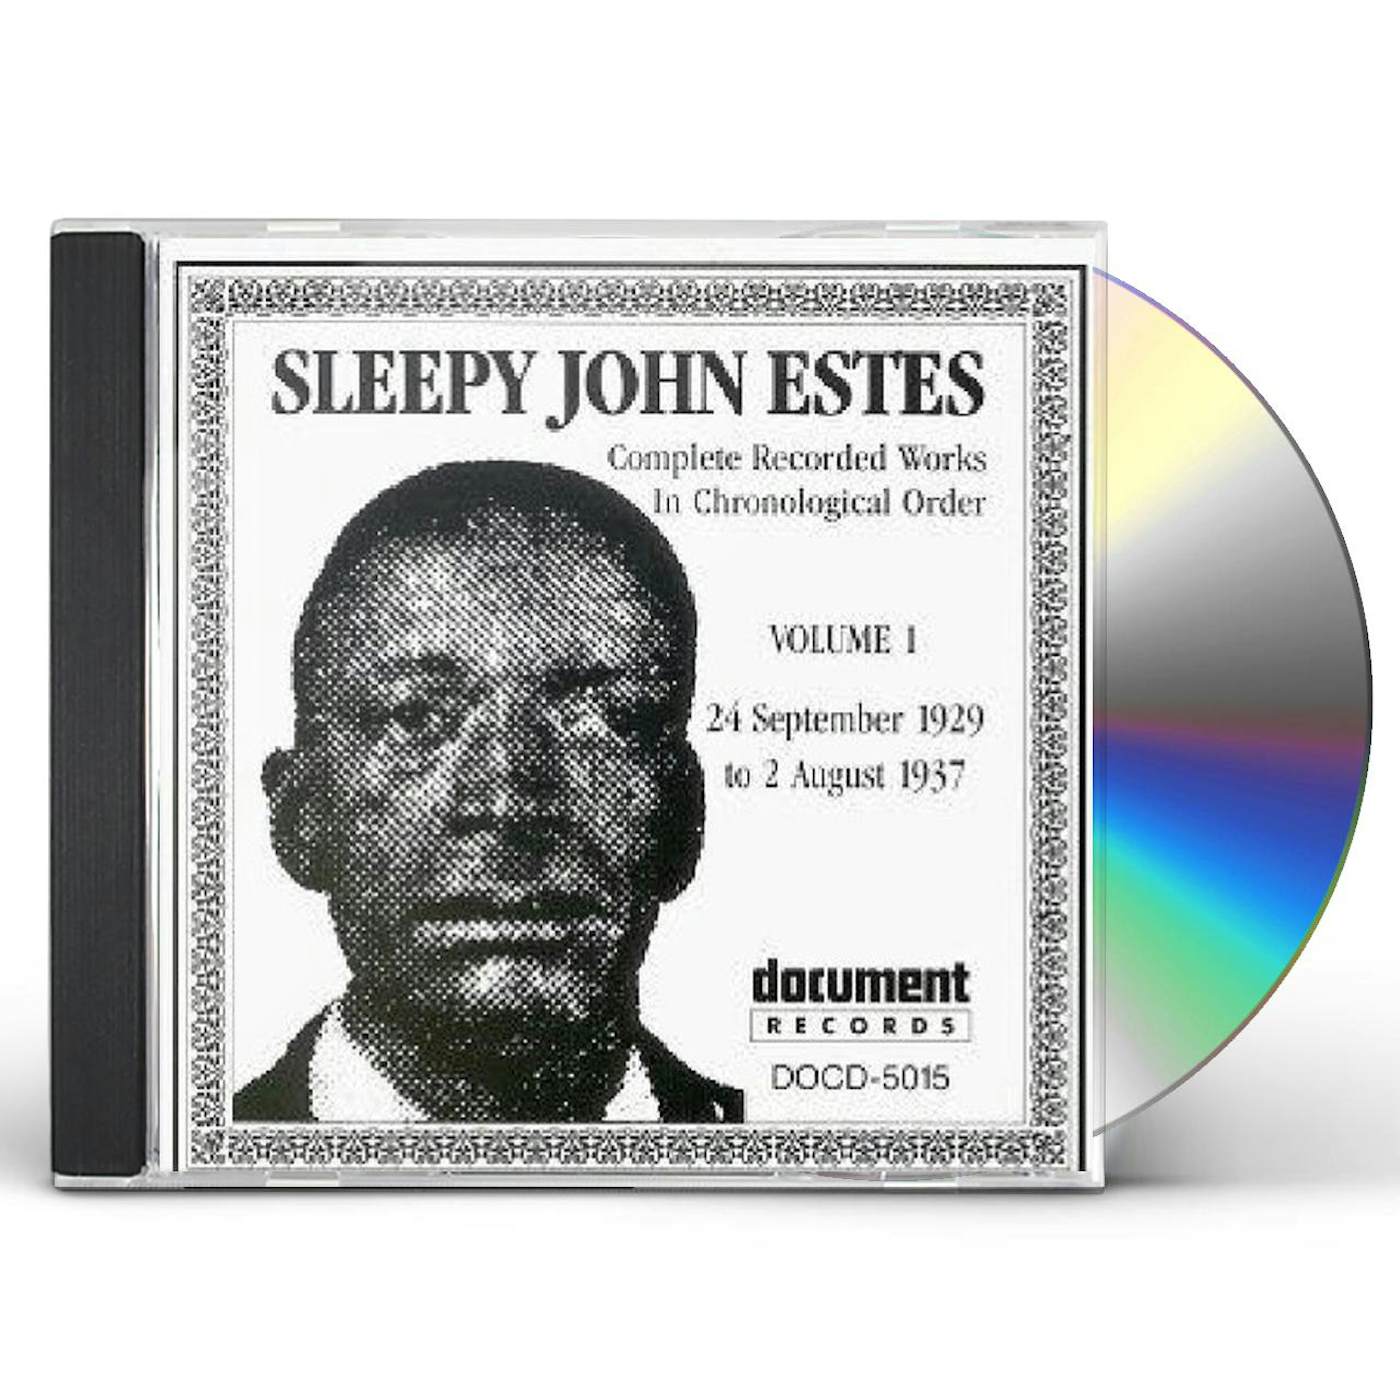 Sleepy John Estes COMPLETE RECORDED 1 CD